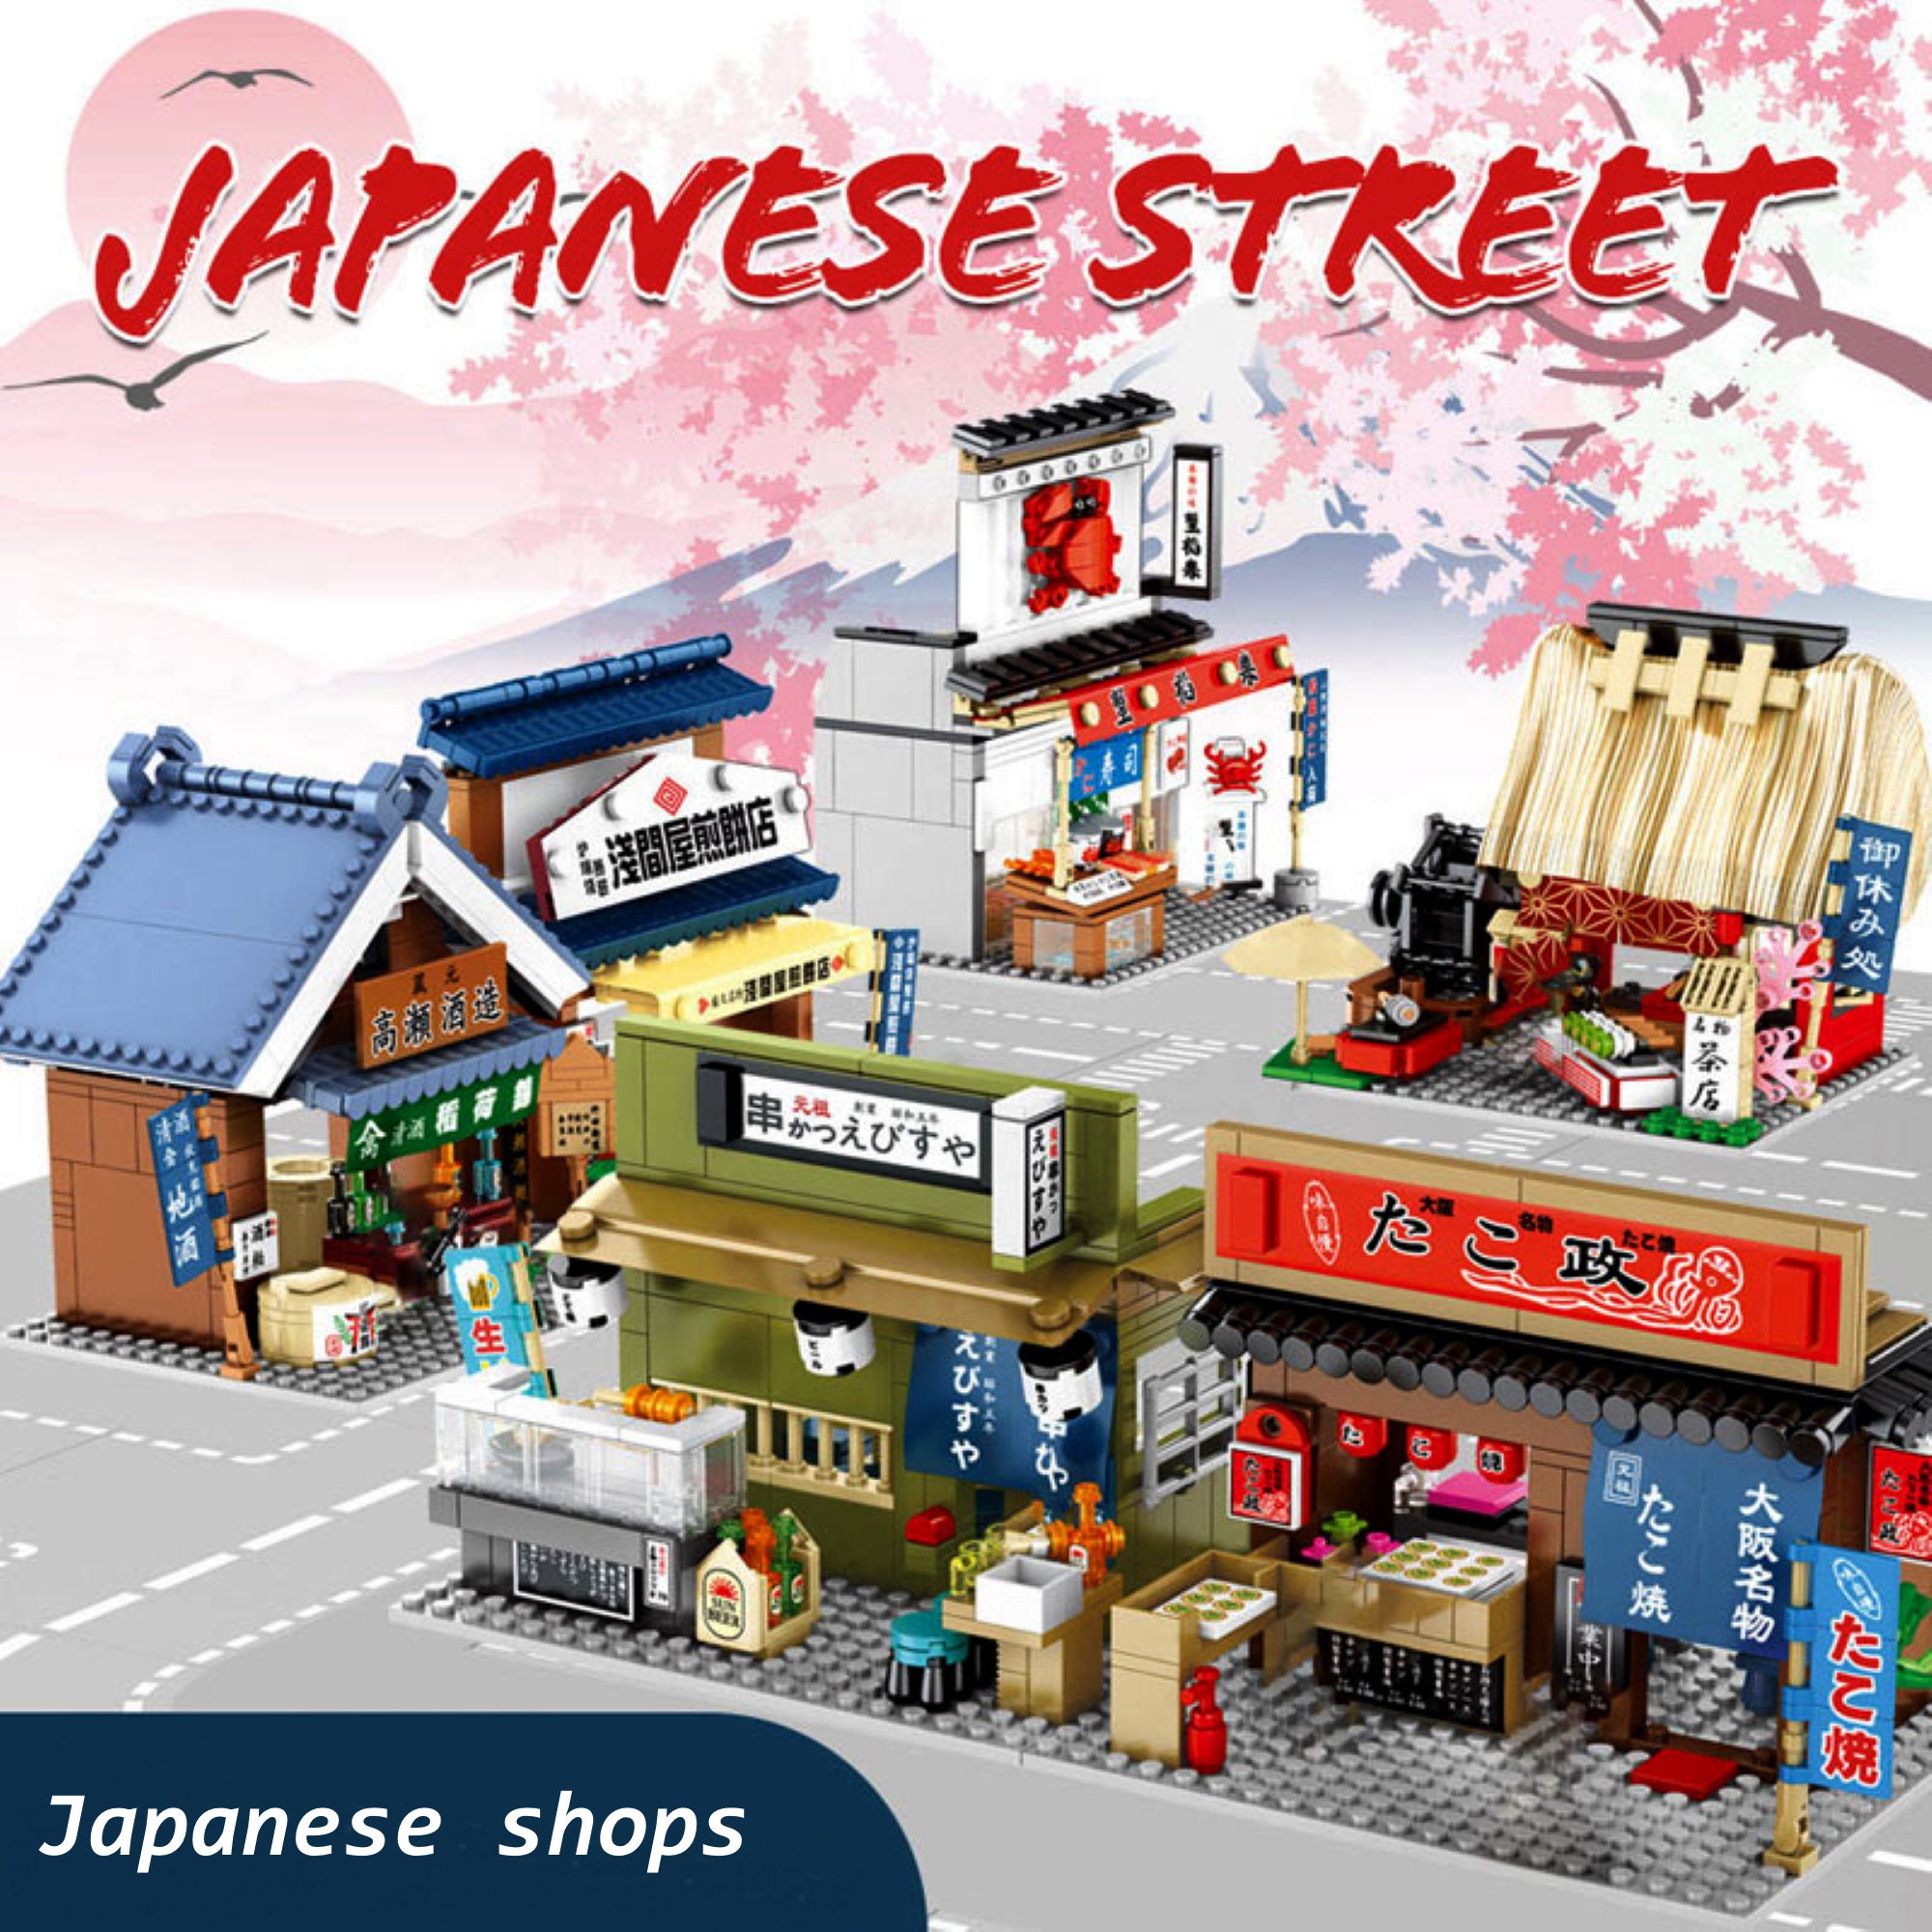 3D Building Blocks, Diy Construction, Educational Toys, Japanese Shops Miniature